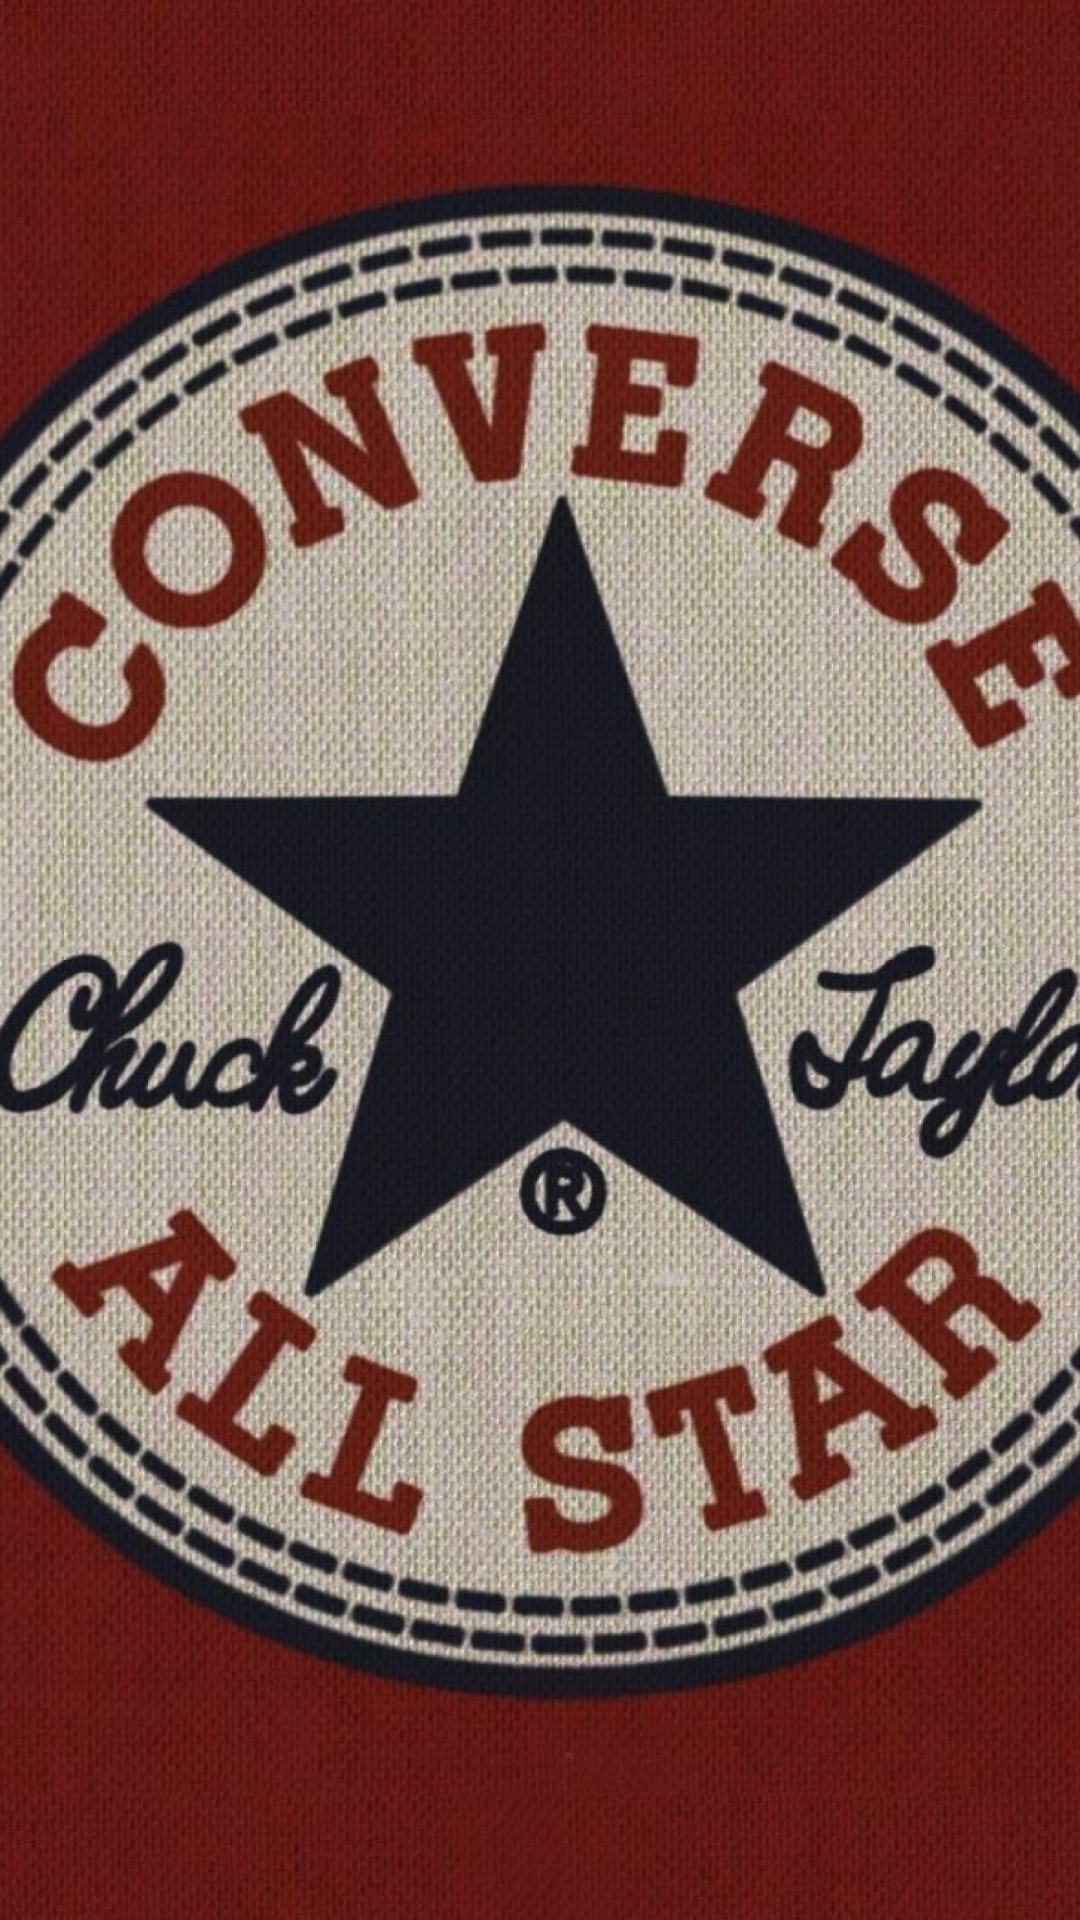 Converse All Star wallpaper 1080x1920